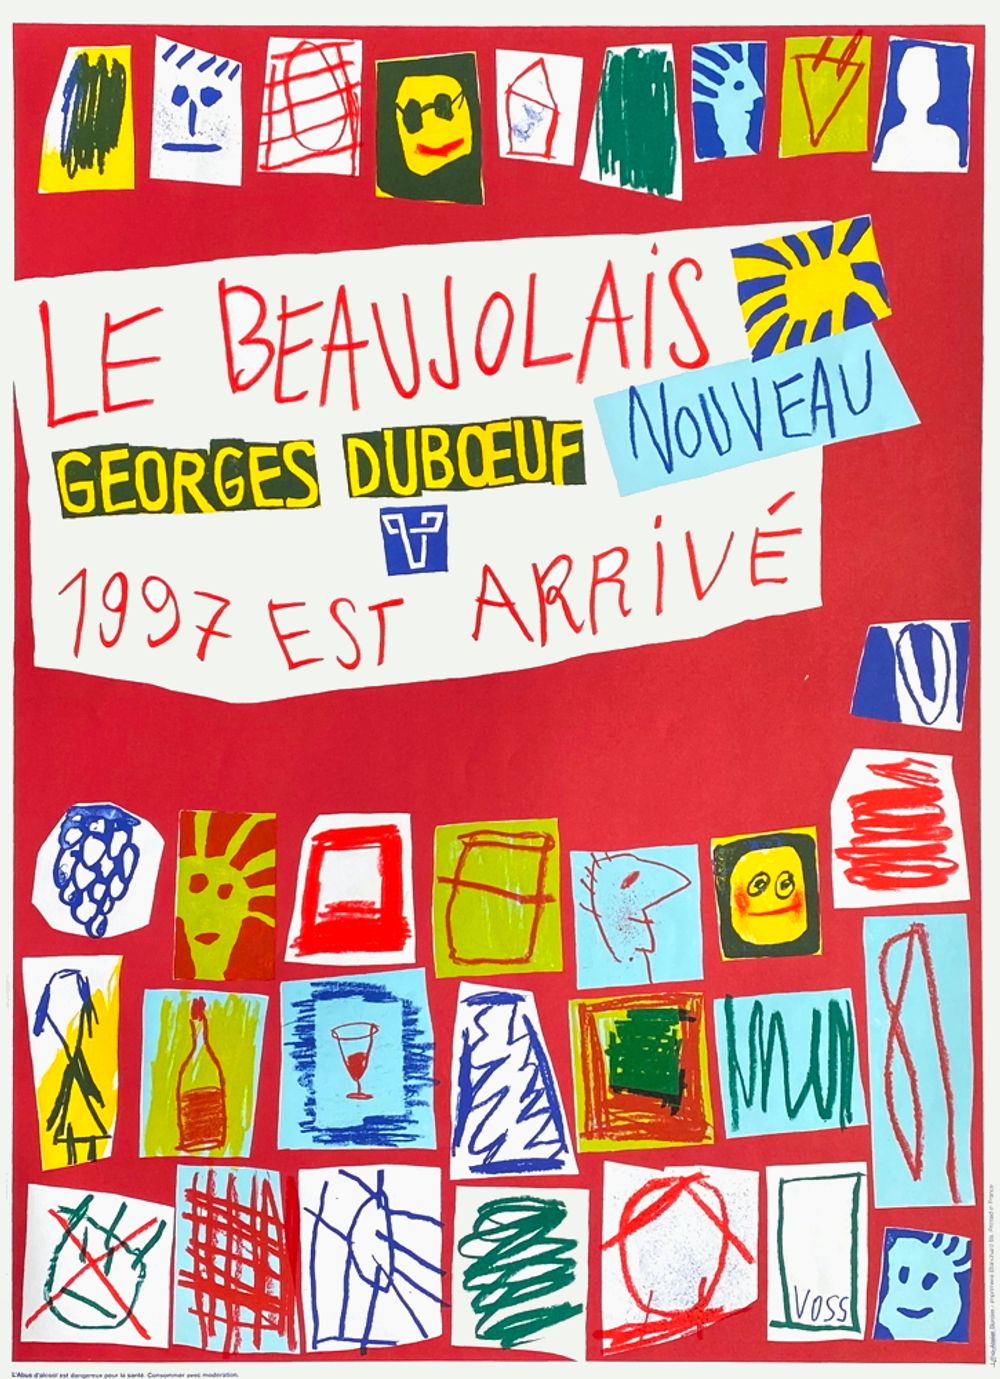 Beaujolais Georges Duboeuf 1997